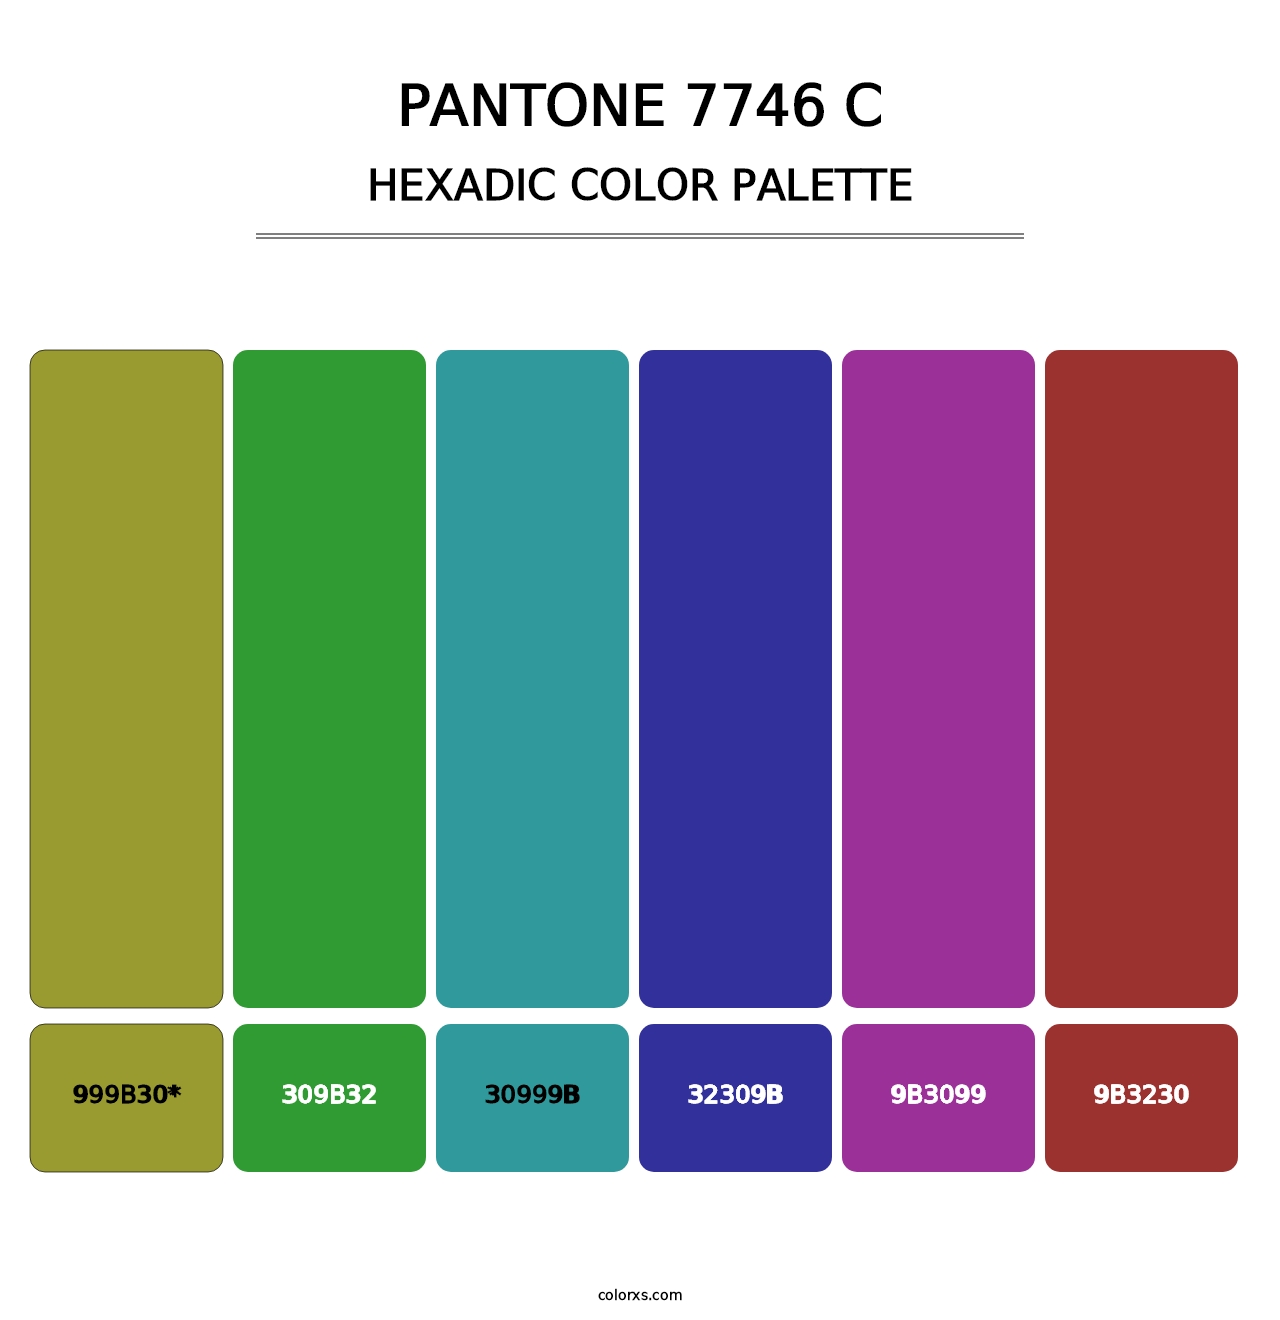 PANTONE 7746 C - Hexadic Color Palette